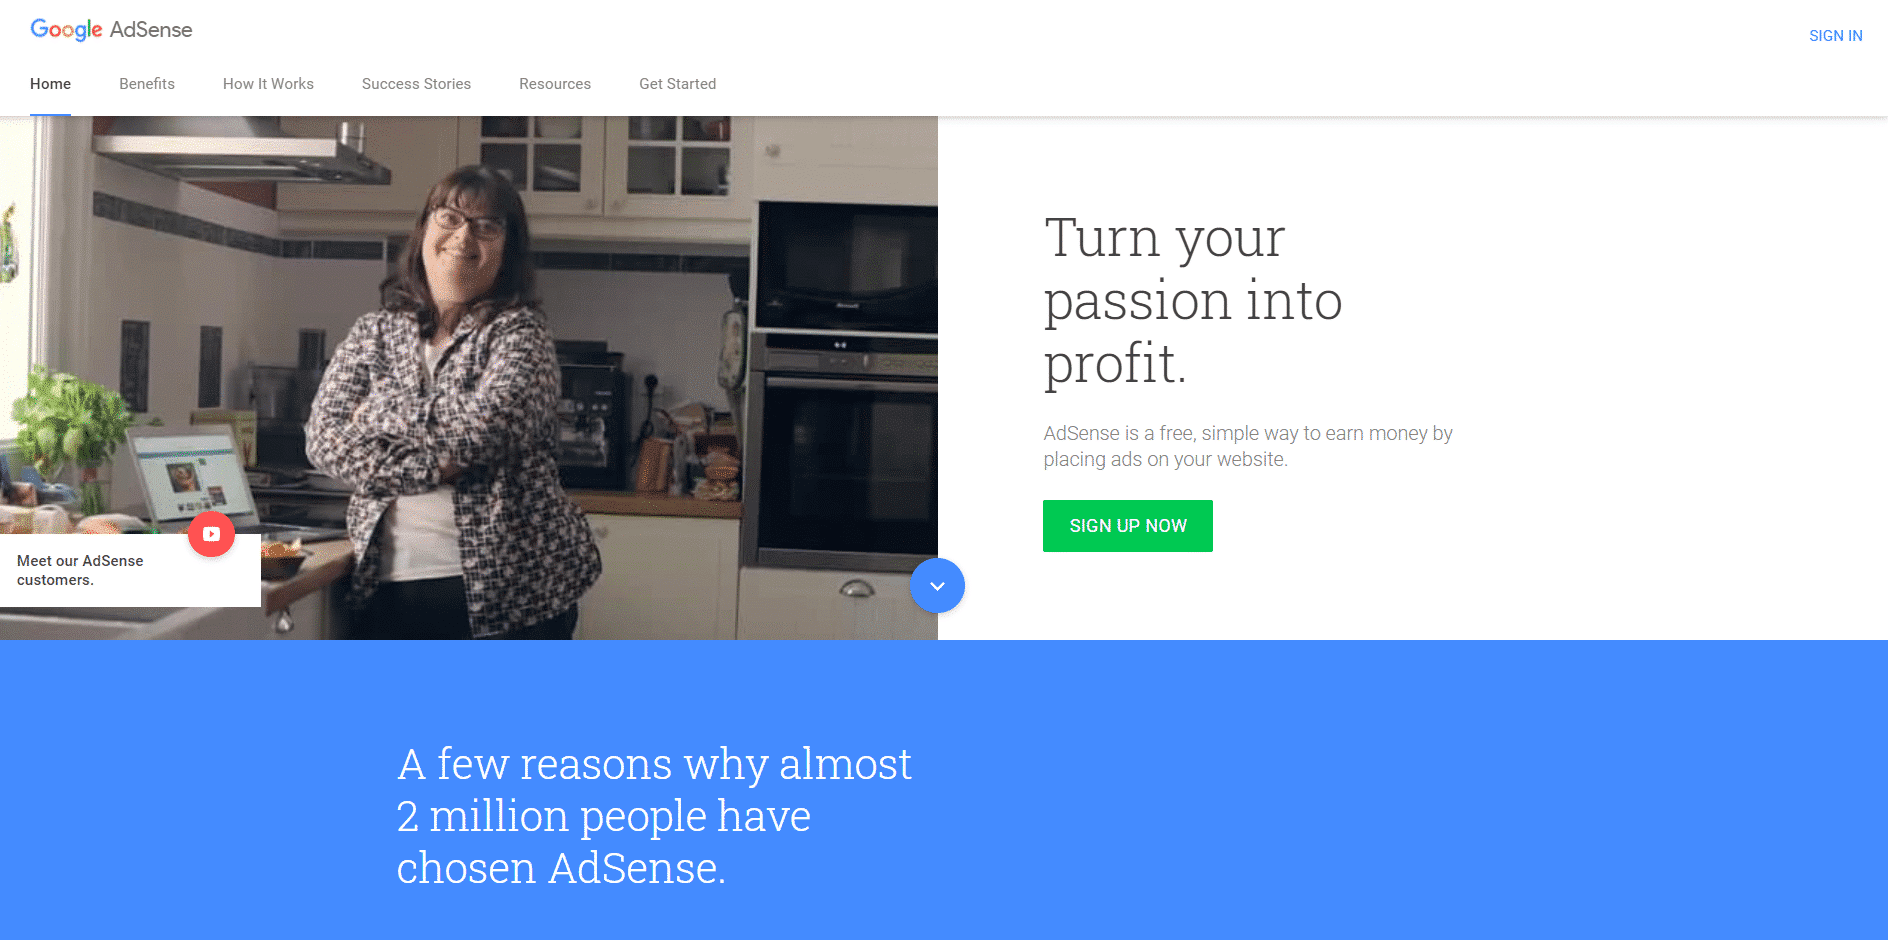 Google-AdSense-Homepage-Make-Money-Blogging